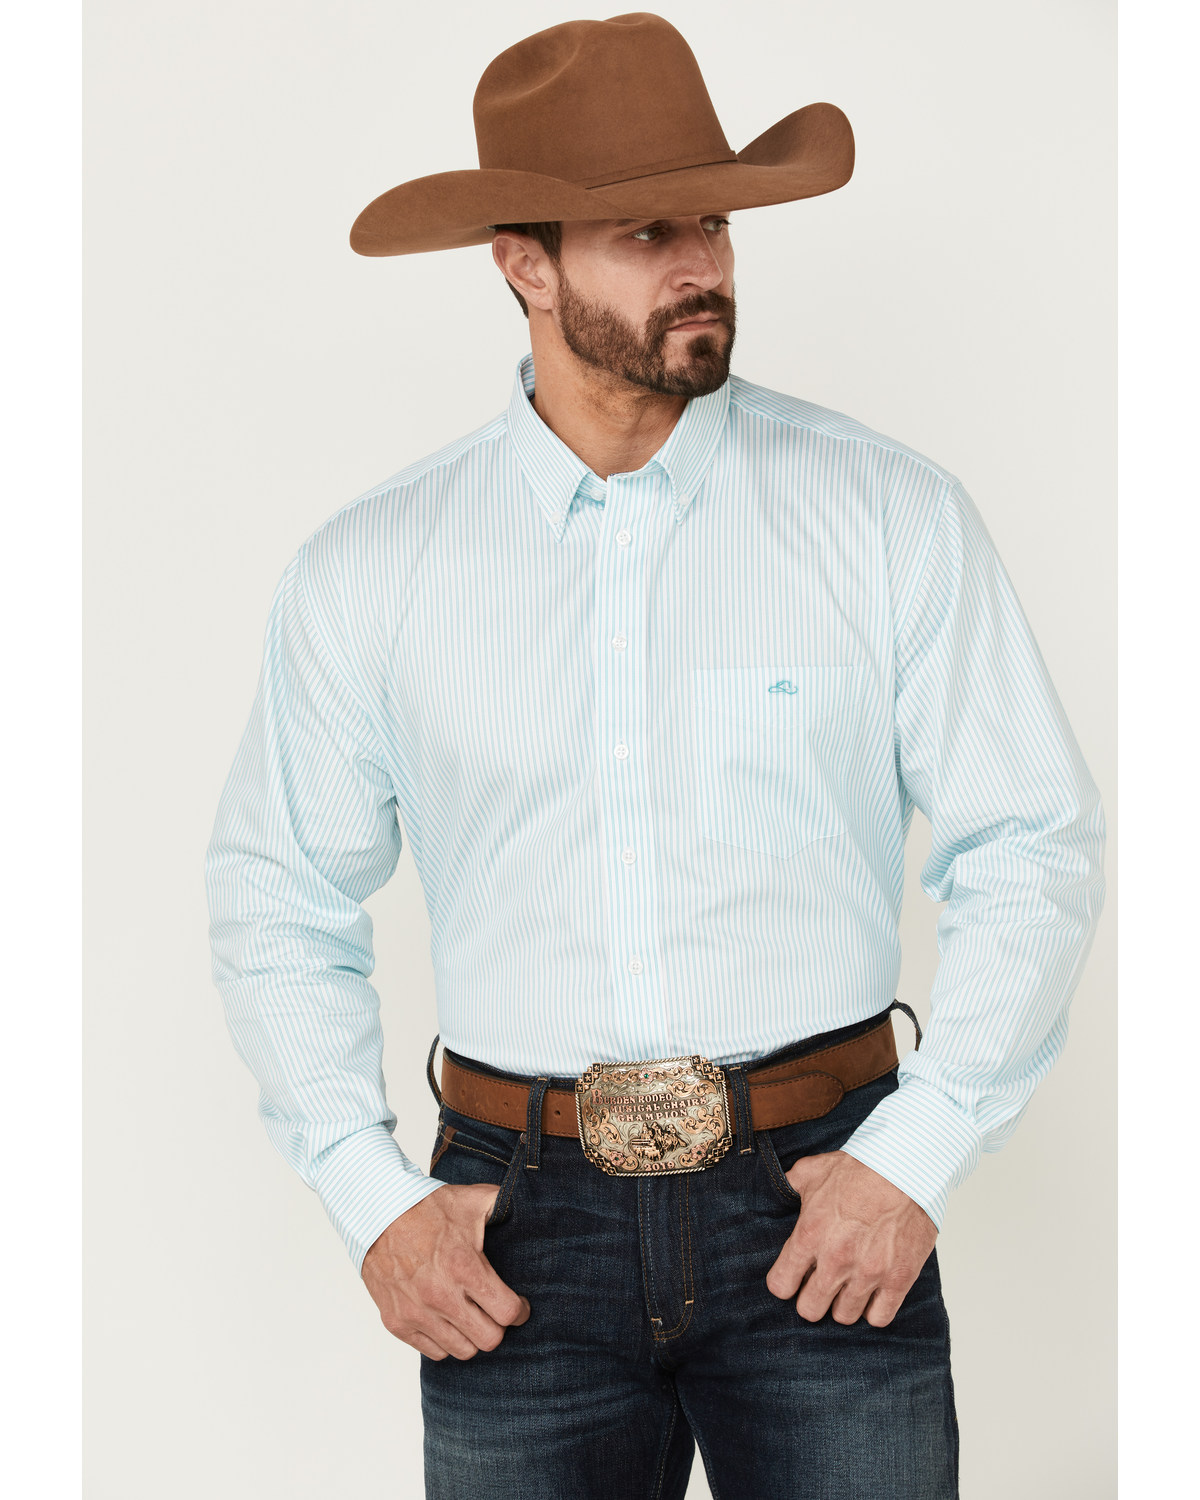 Resistol Men's Trenton Stripe Long Sleeve Button Down Western Shirt